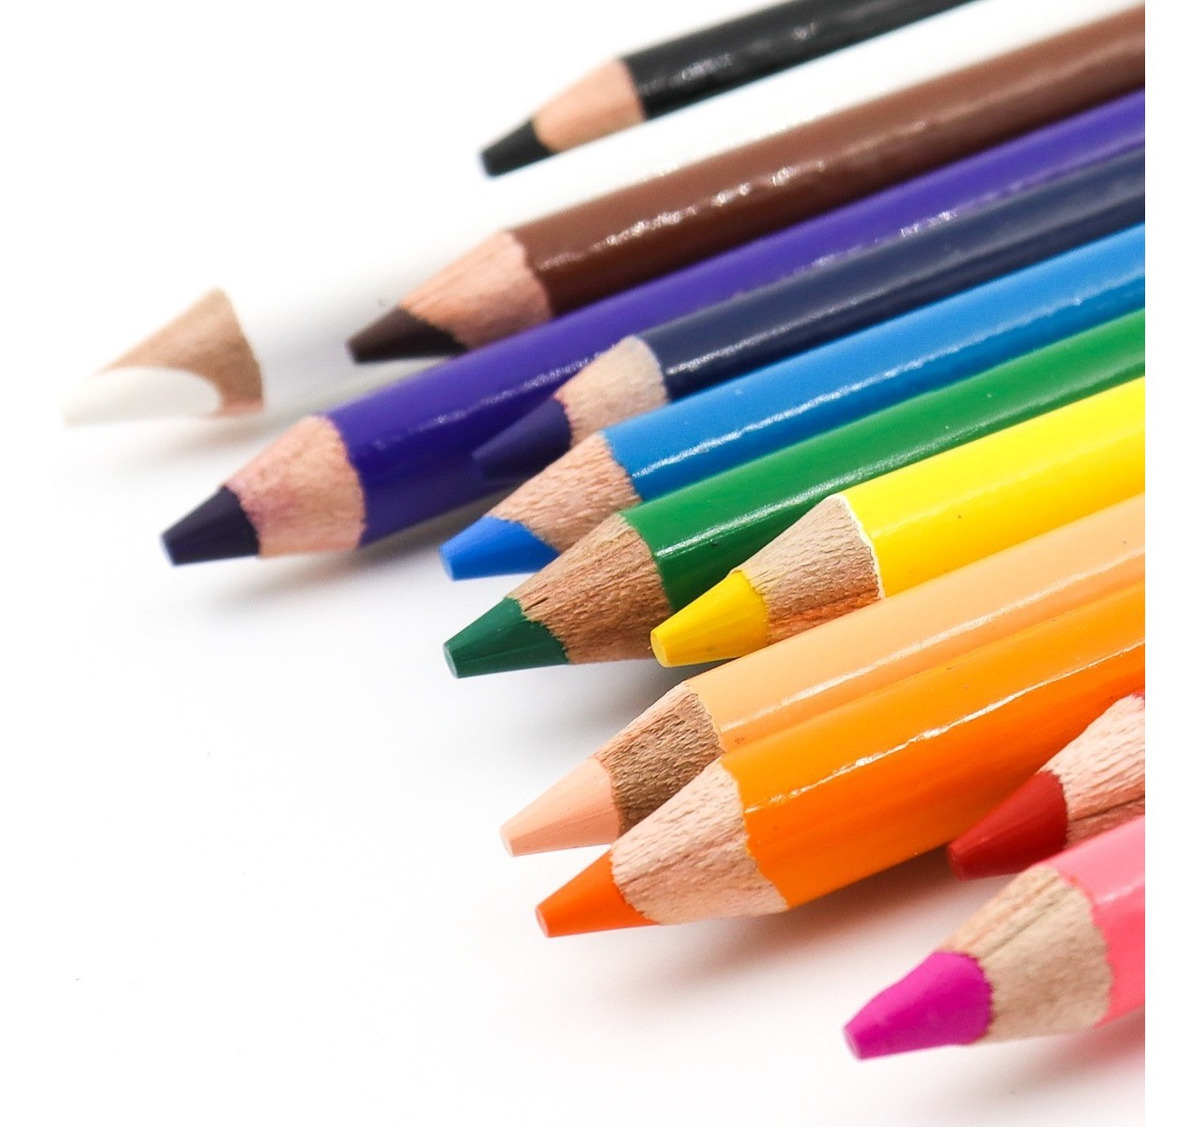 Lápices de Colores Prismacolor Junior